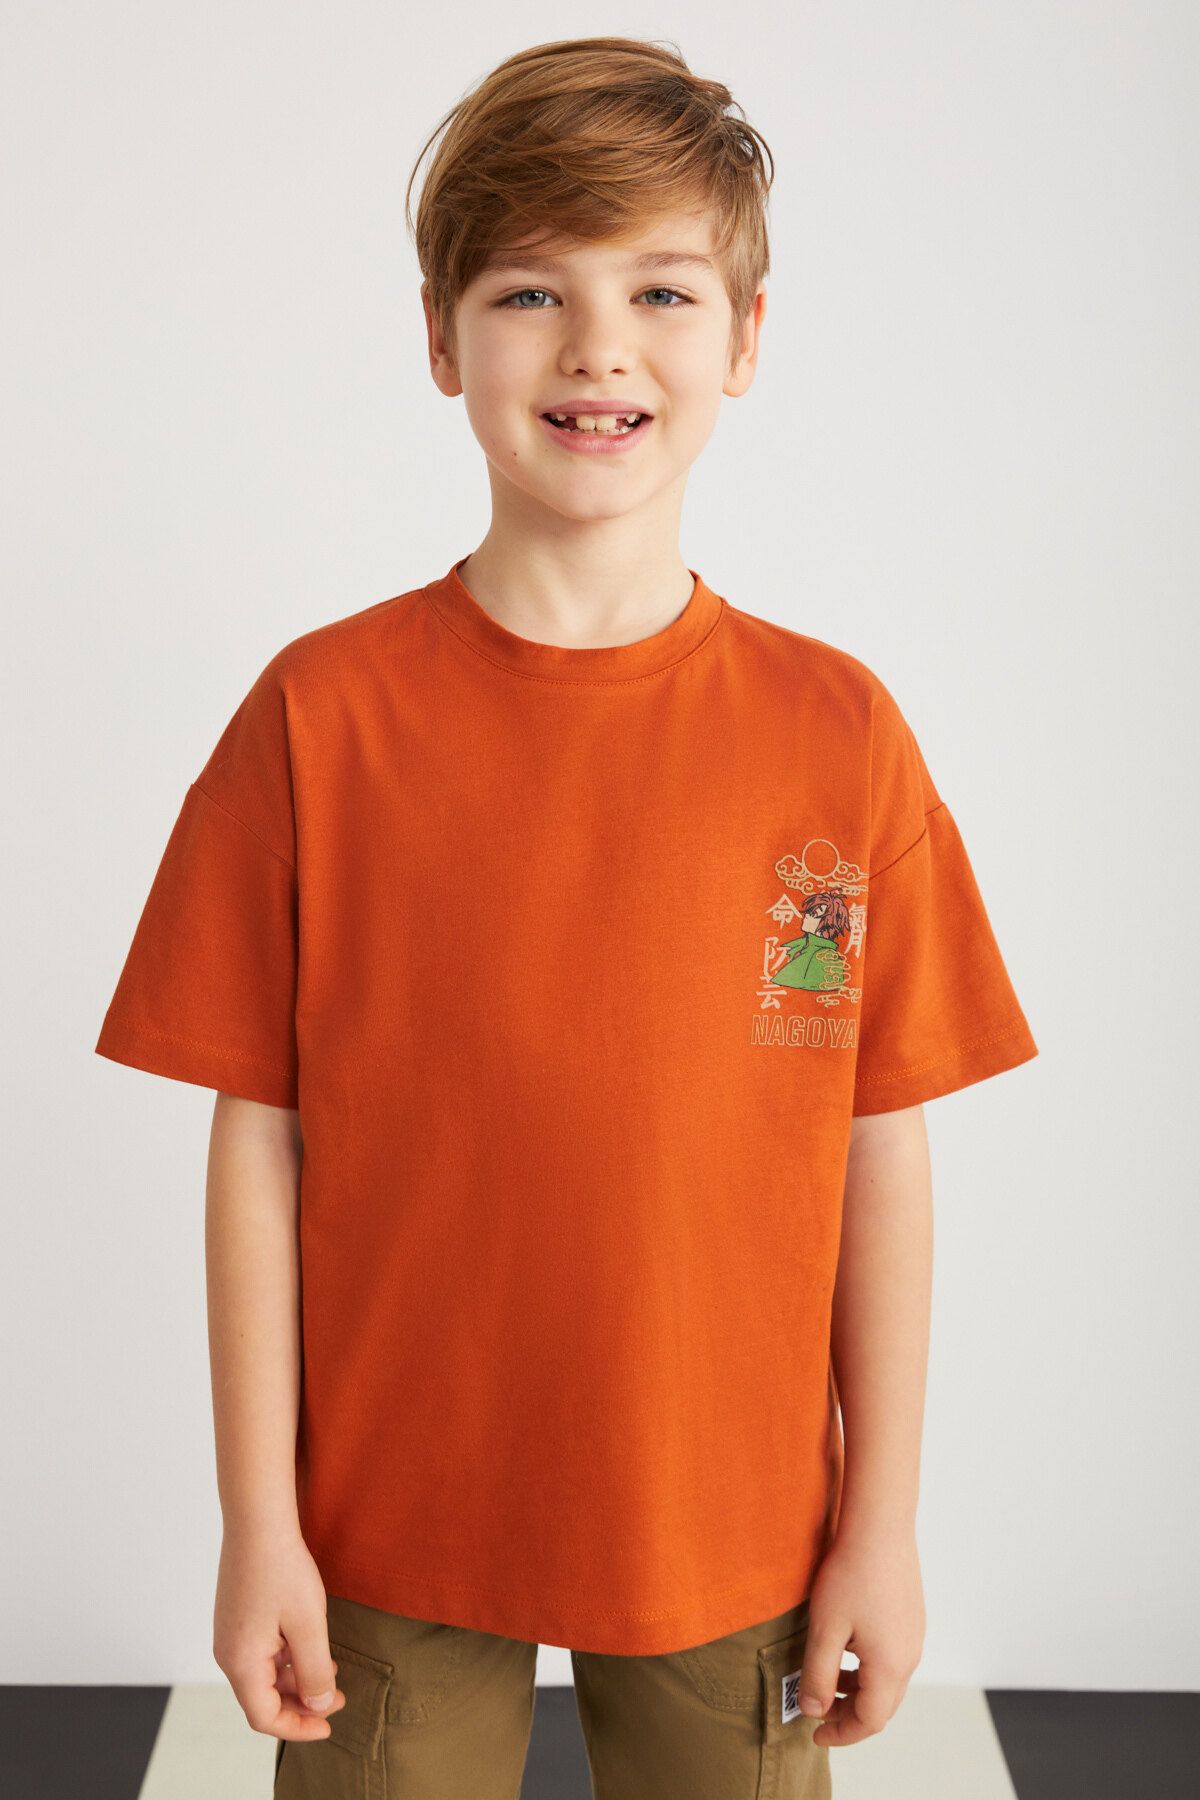 GRIMELANGE Broderıck-grm24013 100% Pamuk Baskılı Kısa Kollu Erkek Çocuk T-shirt Kiremit Rengi T-shirt